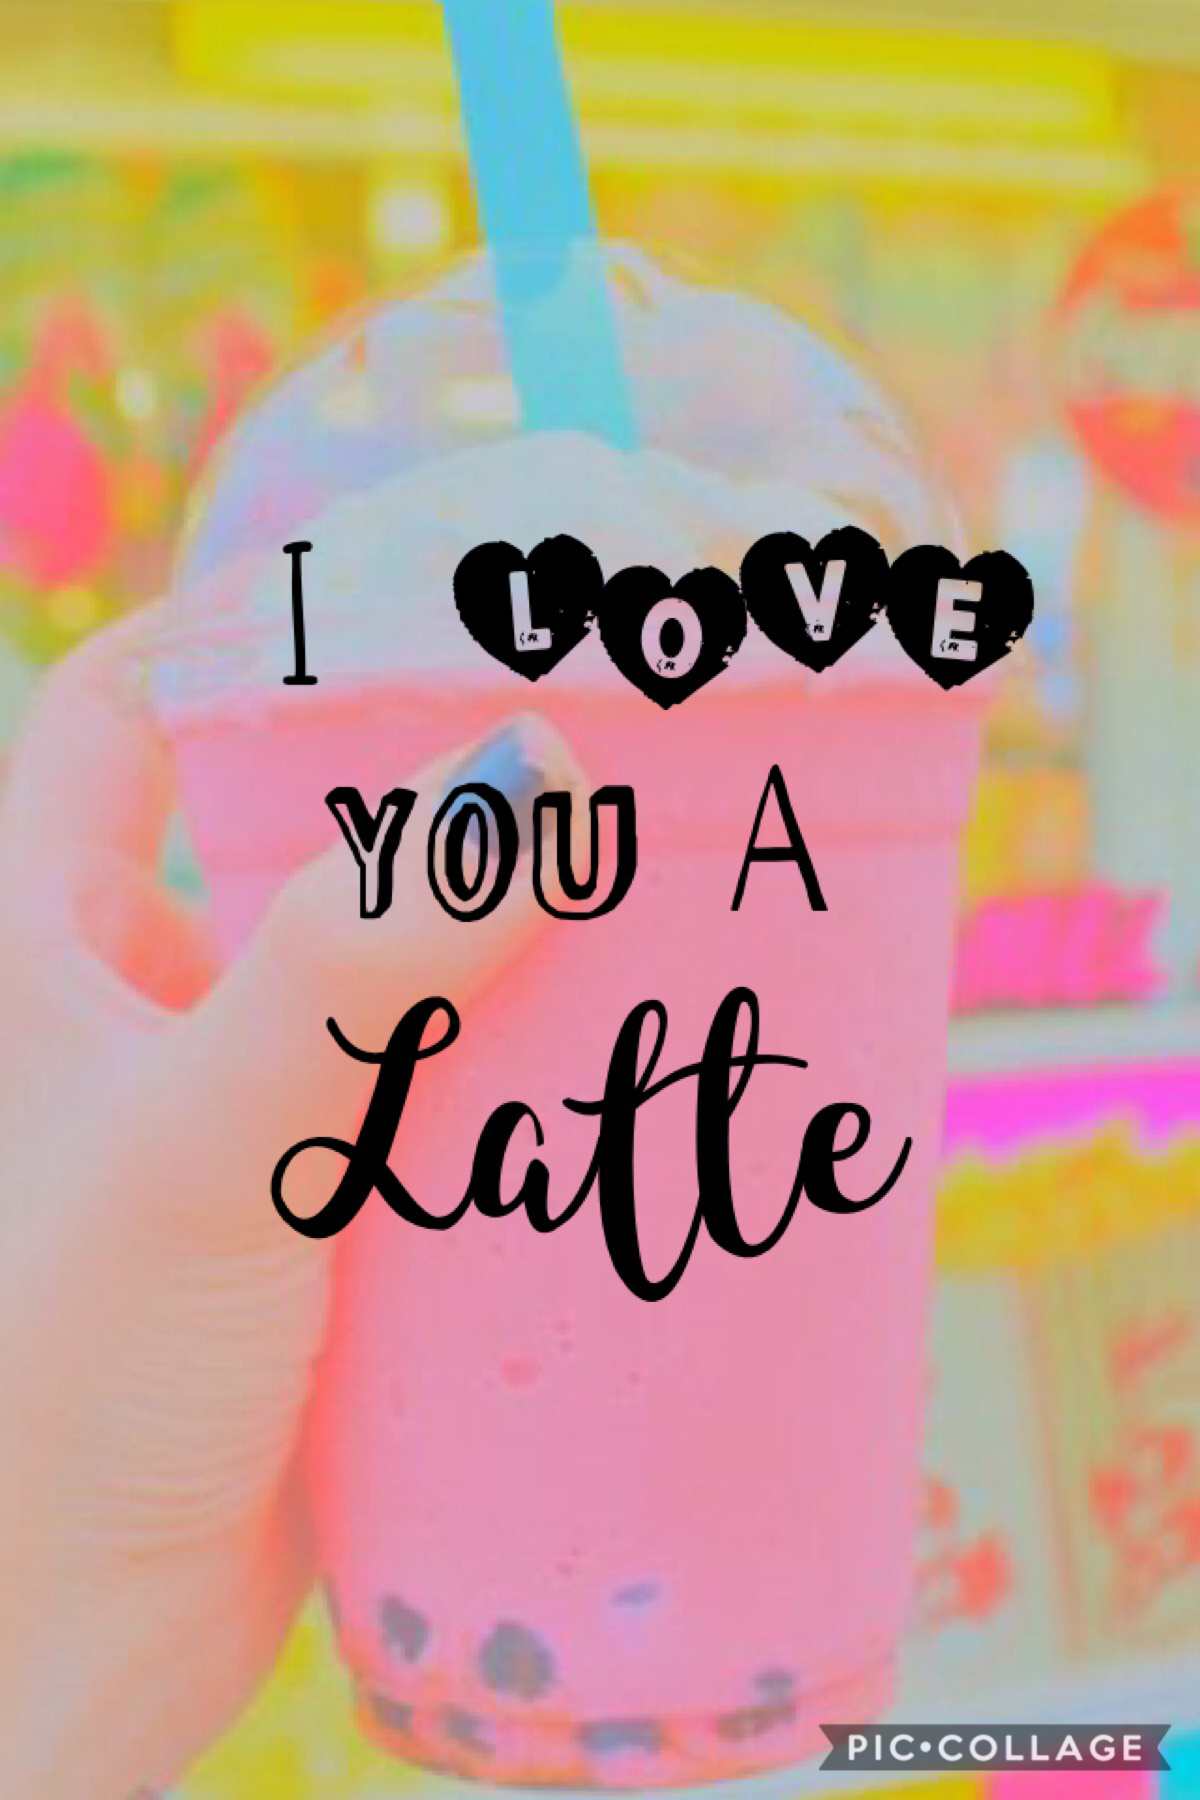 I love you a latte ❤️